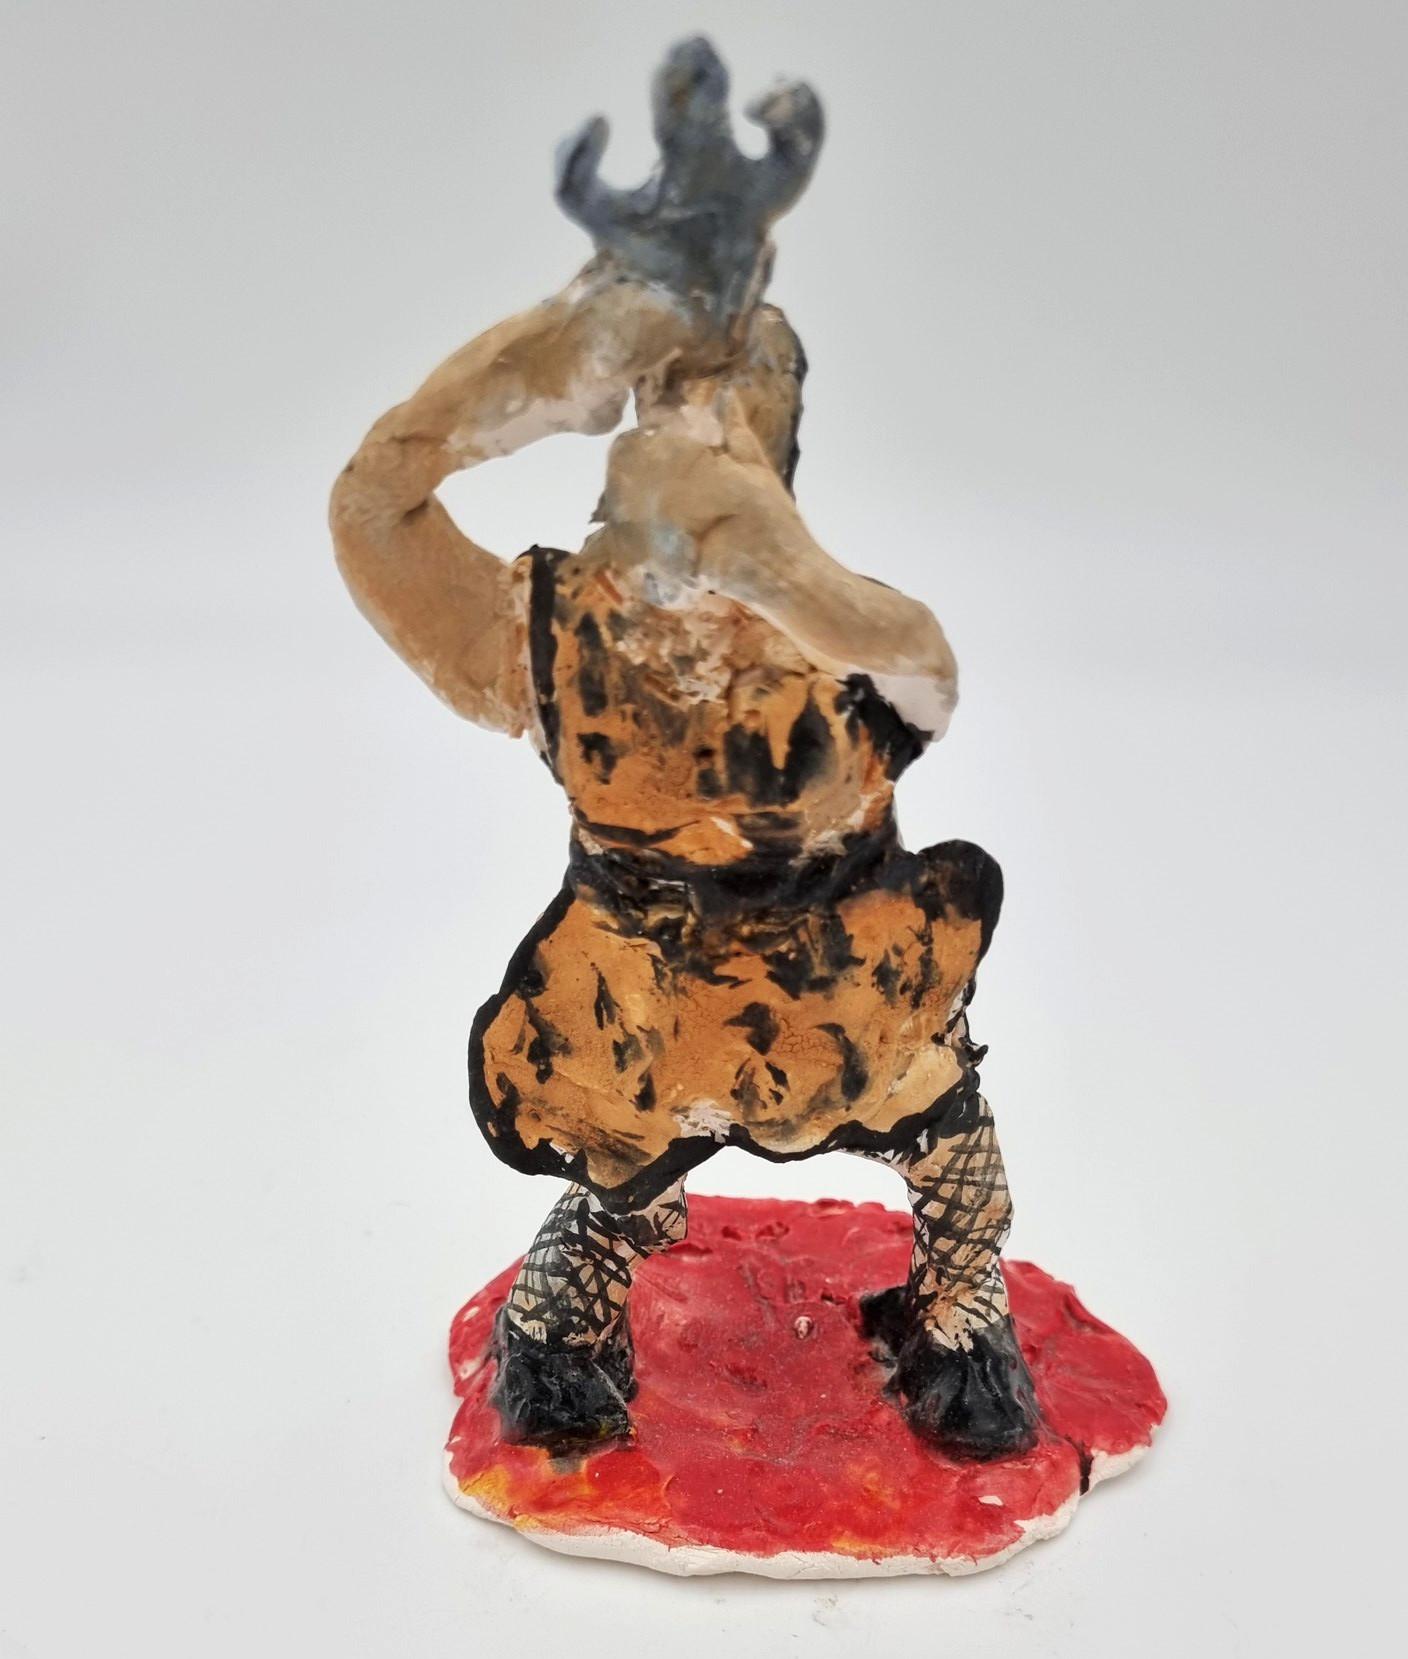 Ann Rothman Figurative Sculpture - Sword Swallower (Circus, Whimsical, Viola Frey, Delicate, Playful, Fun, Ringling